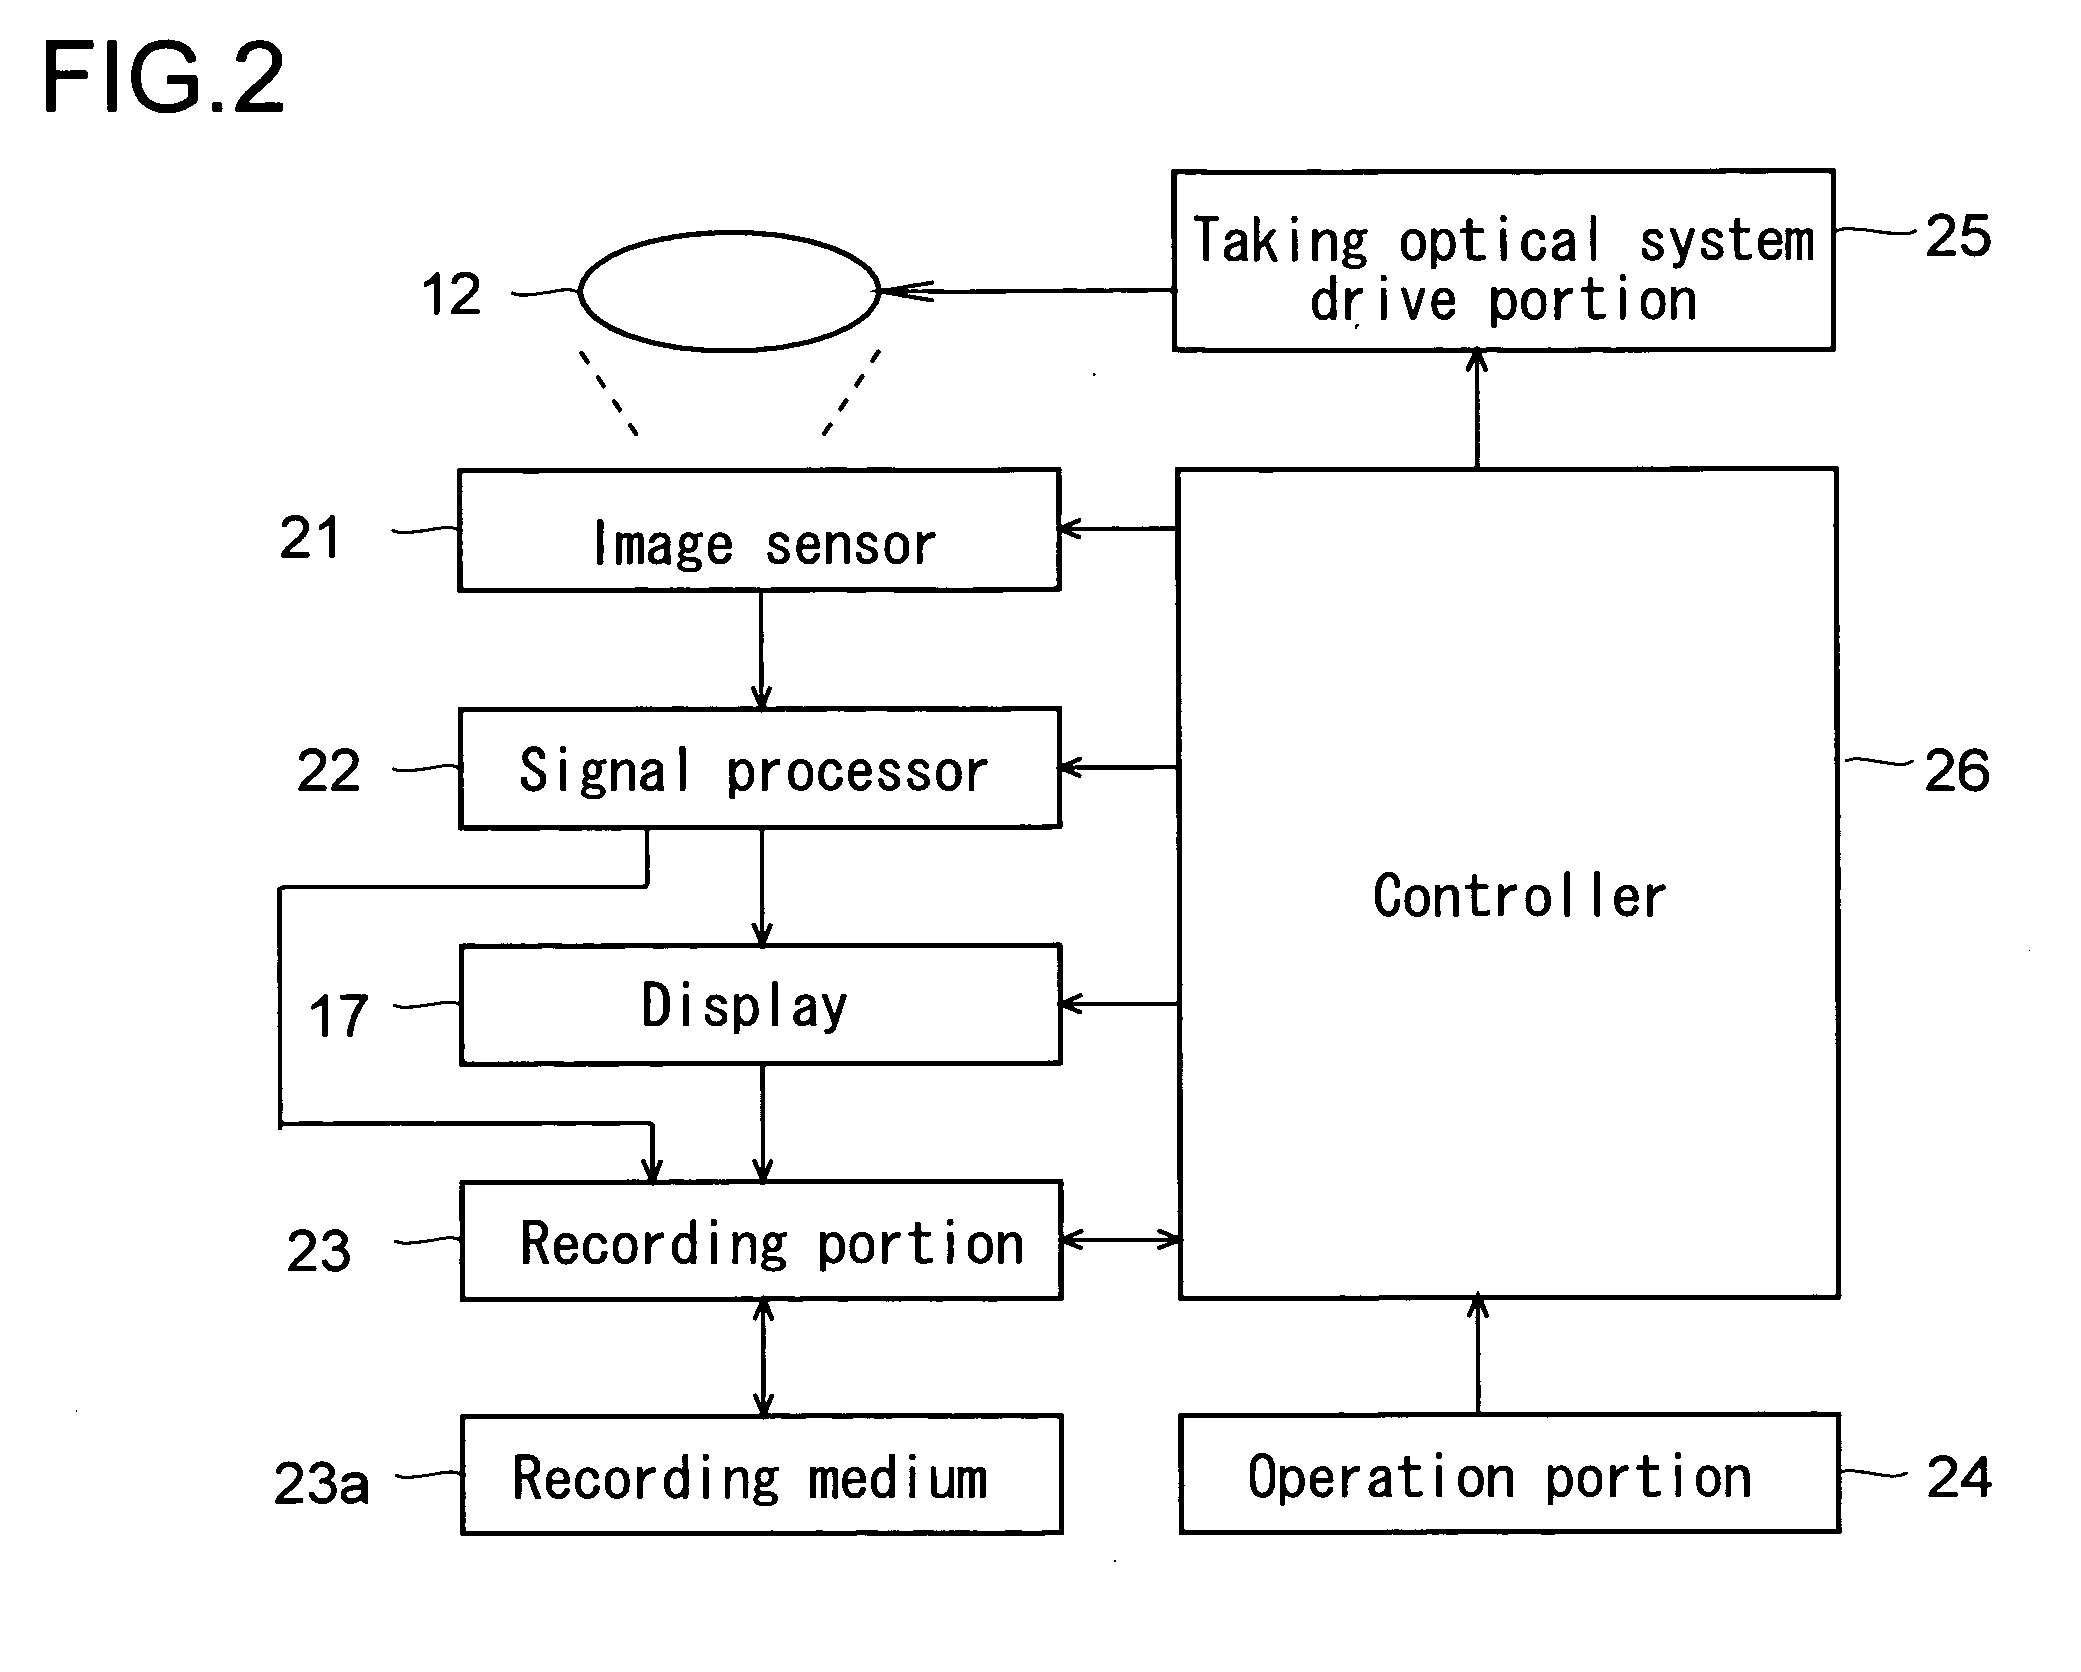 Taking optical system and image sensing apparatus